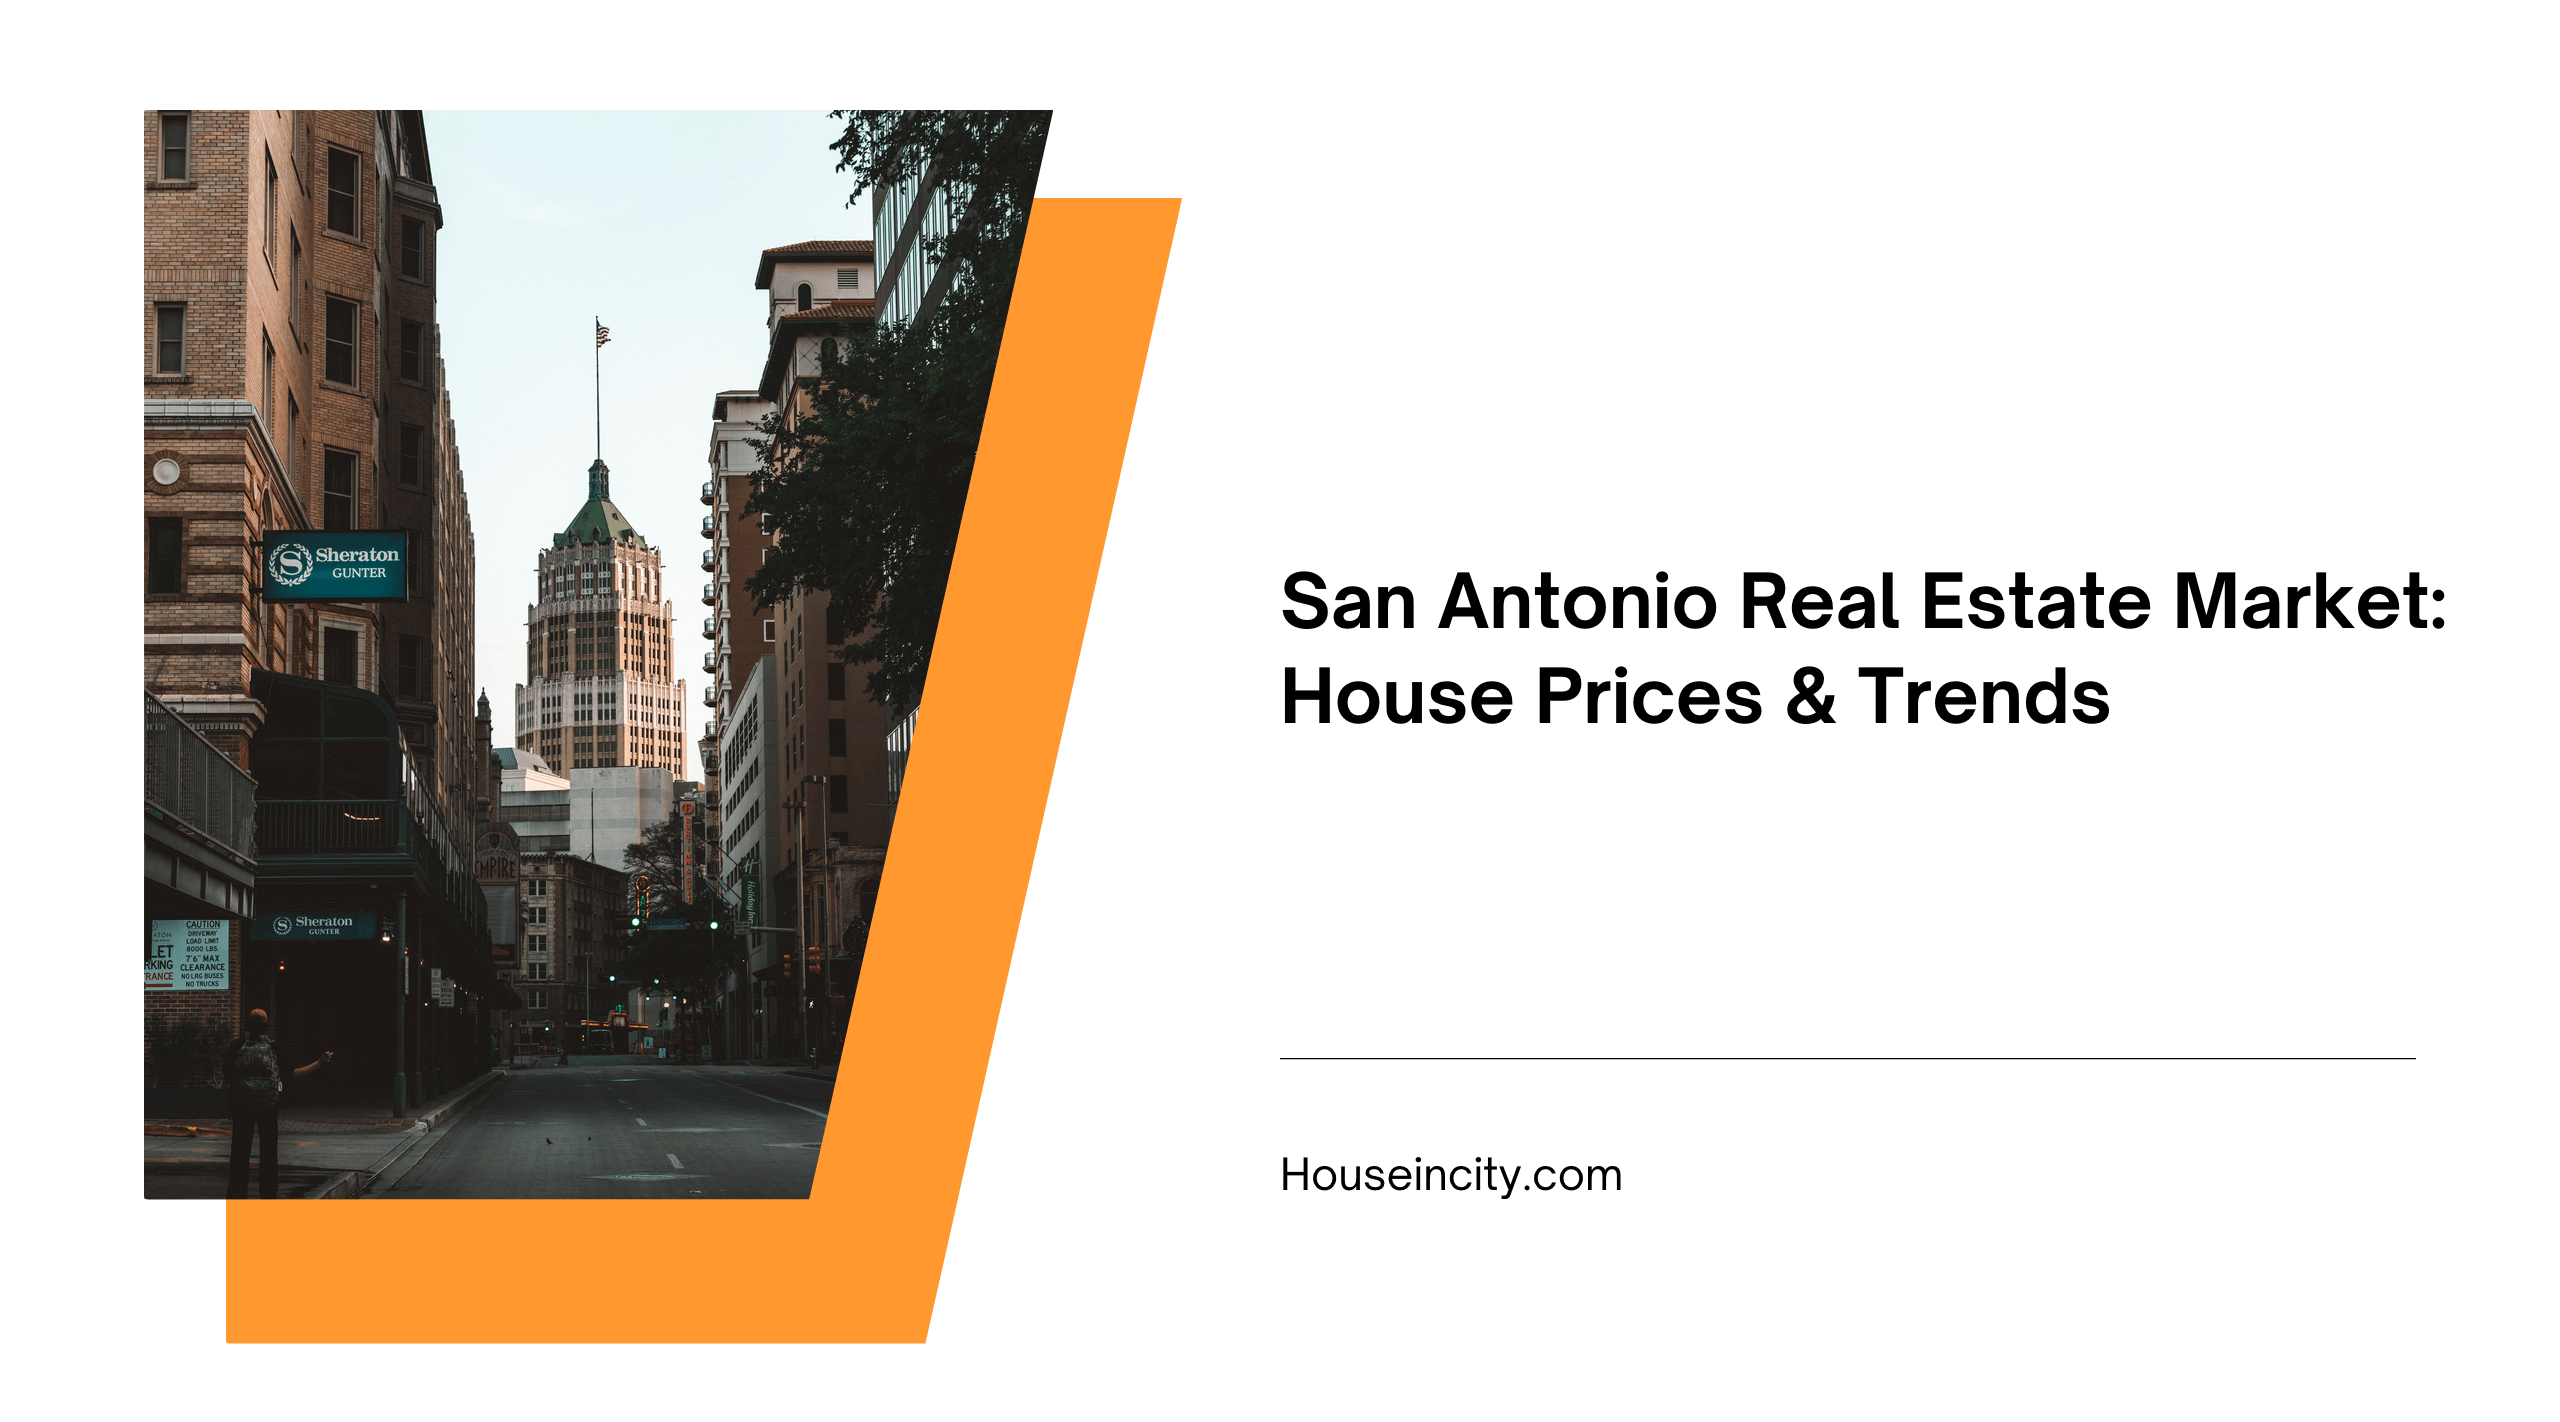 San Antonio Real Estate Market: House Prices & Trends